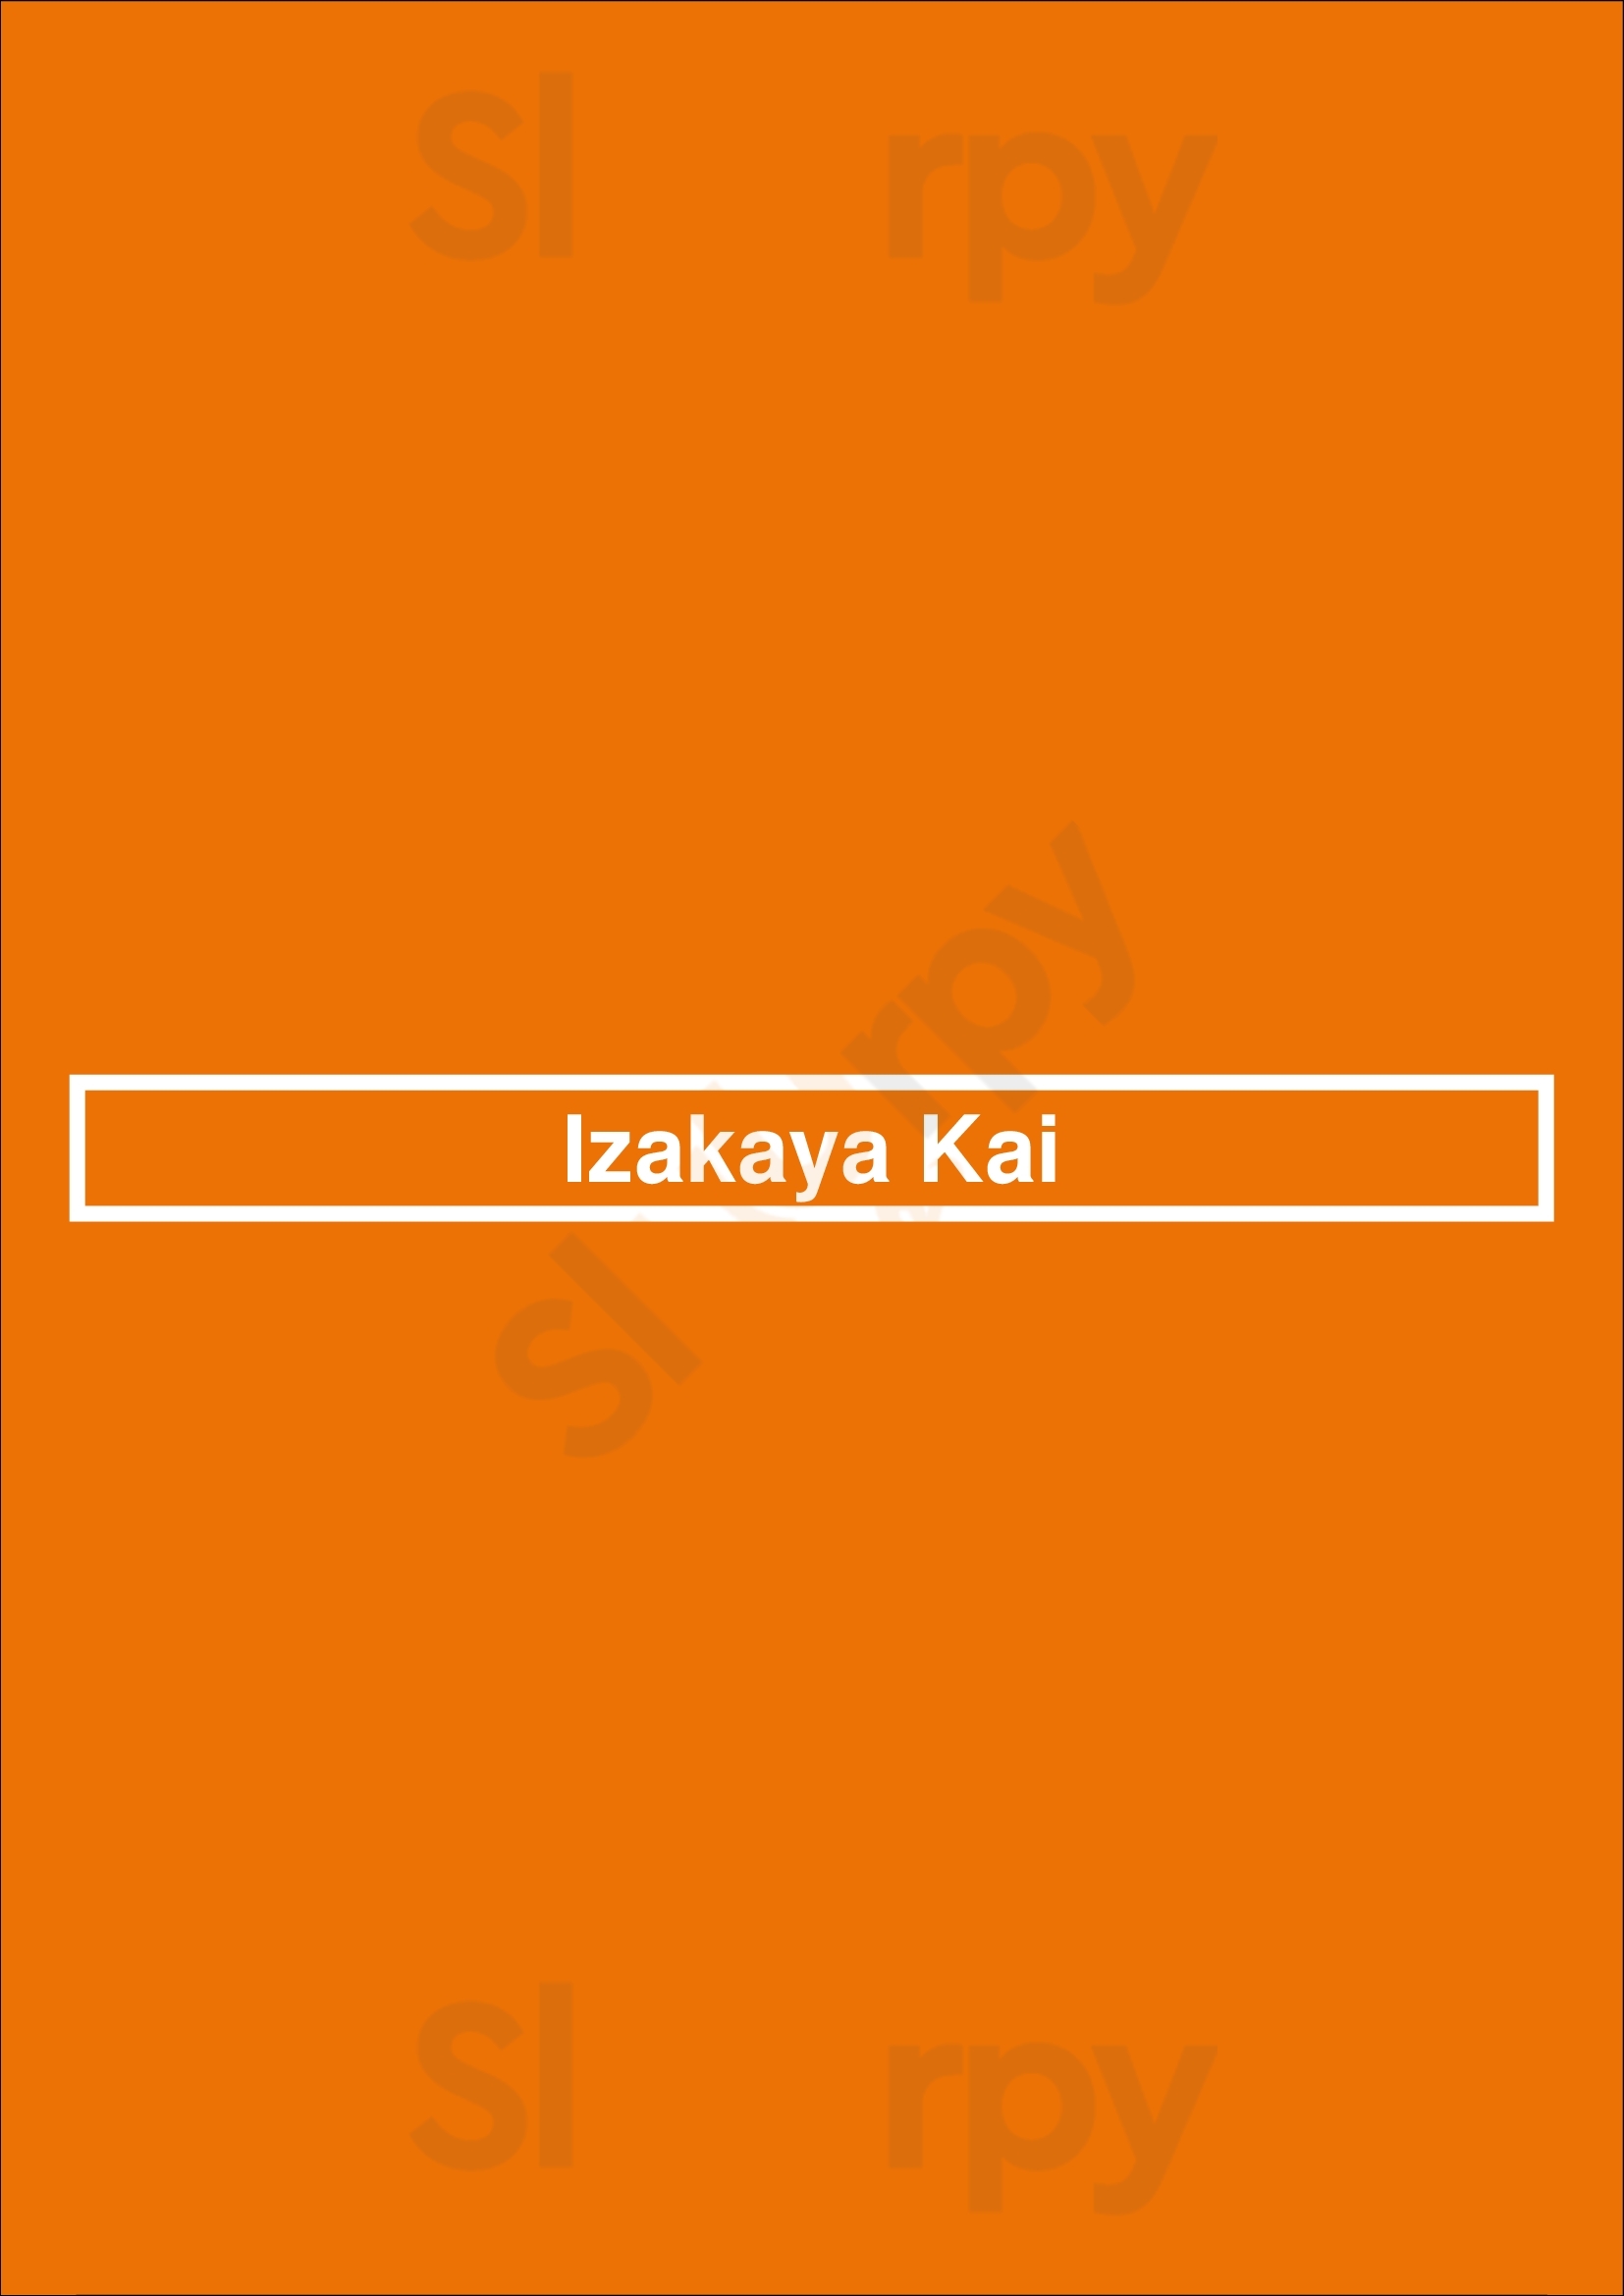 Izakaya Kai Honolulu Menu - 1